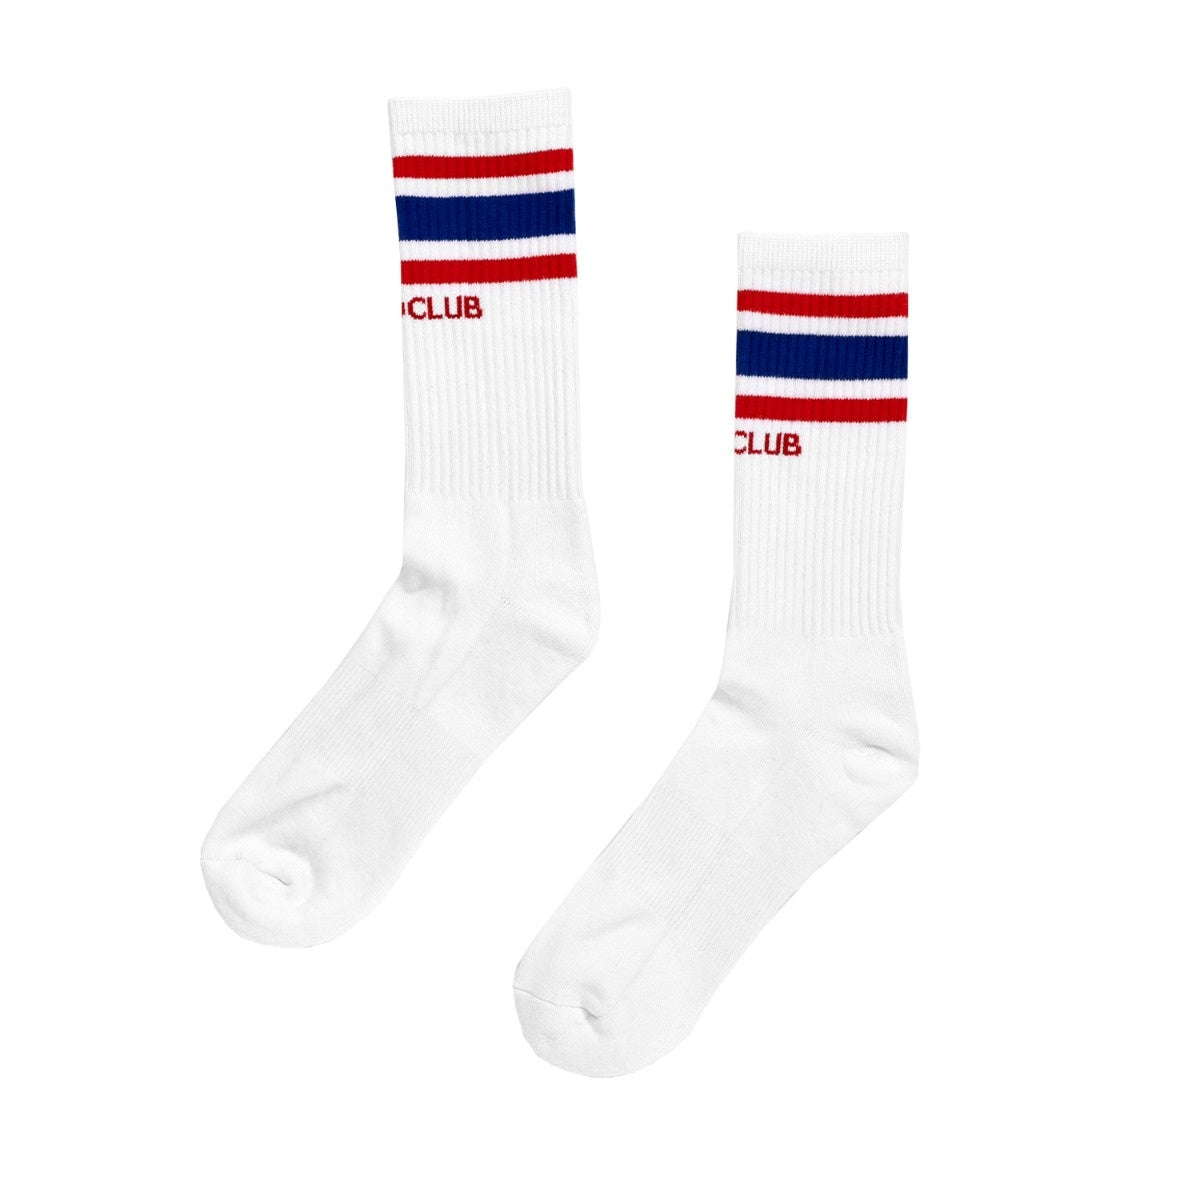 Pro Club Stripe Crew Sock - White/Blue/Red (Size 9-13)